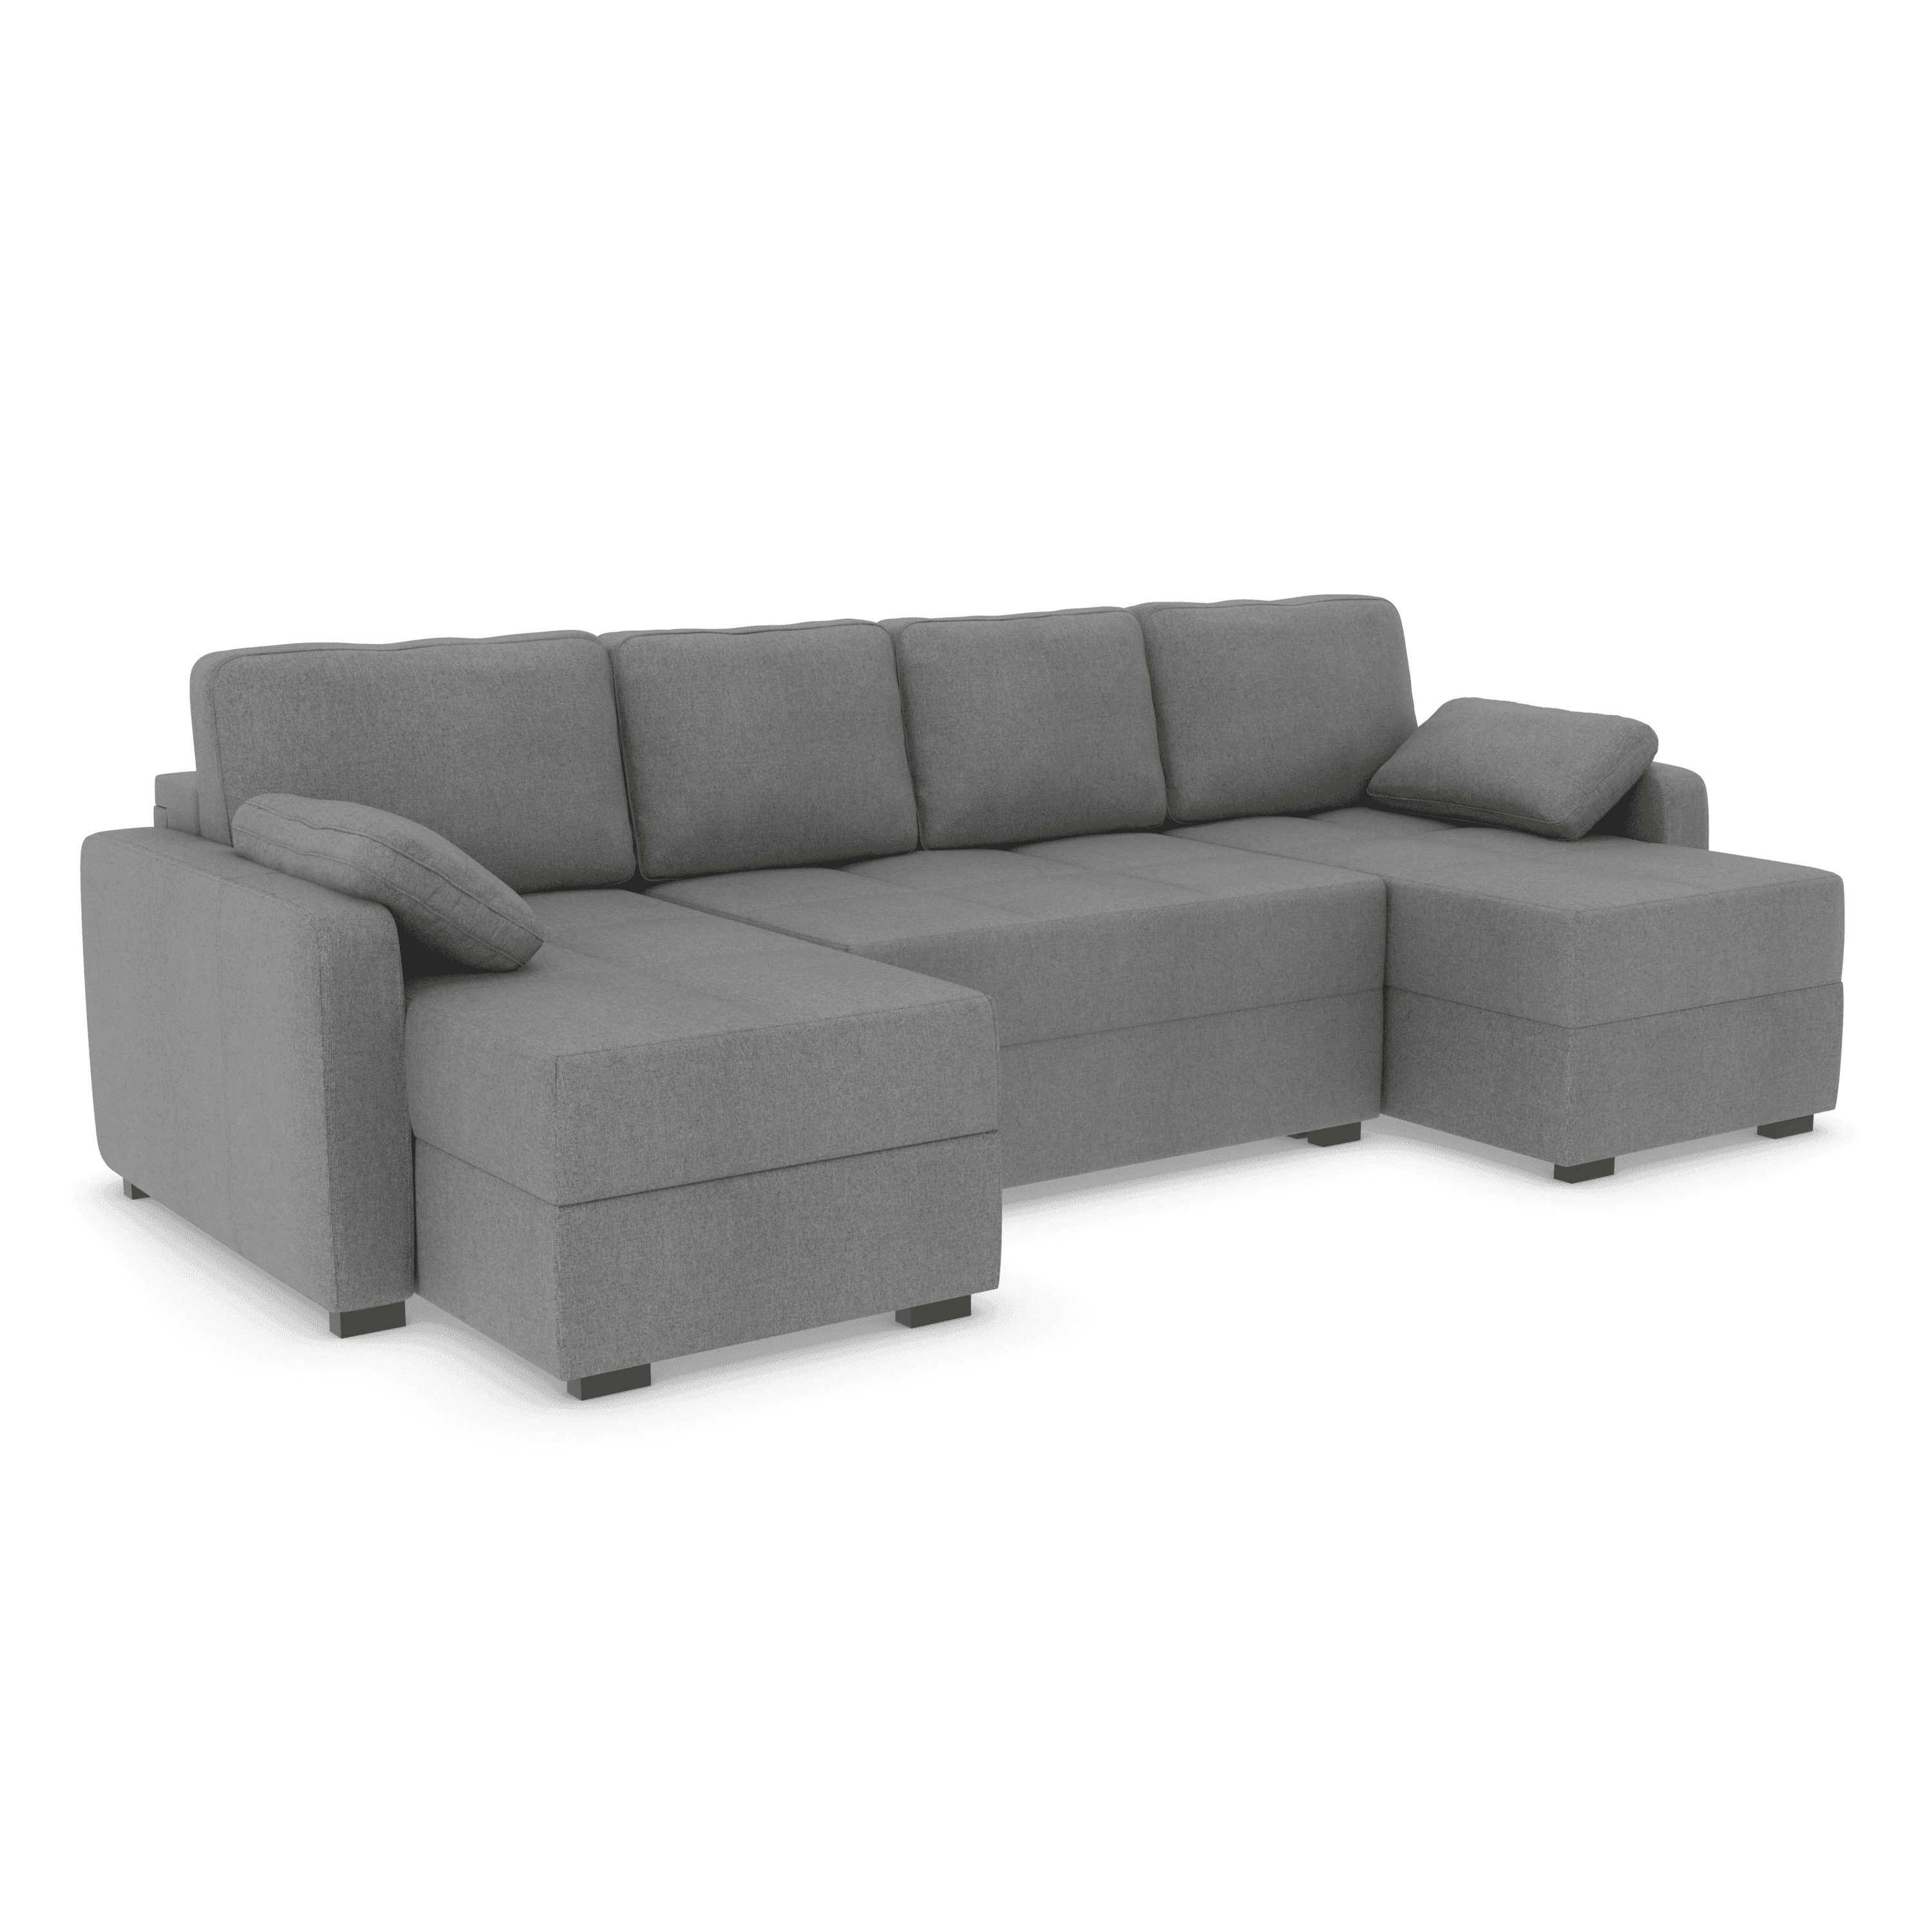 Harry Large Corner Modular Sofa Bed - Pebble - image 1